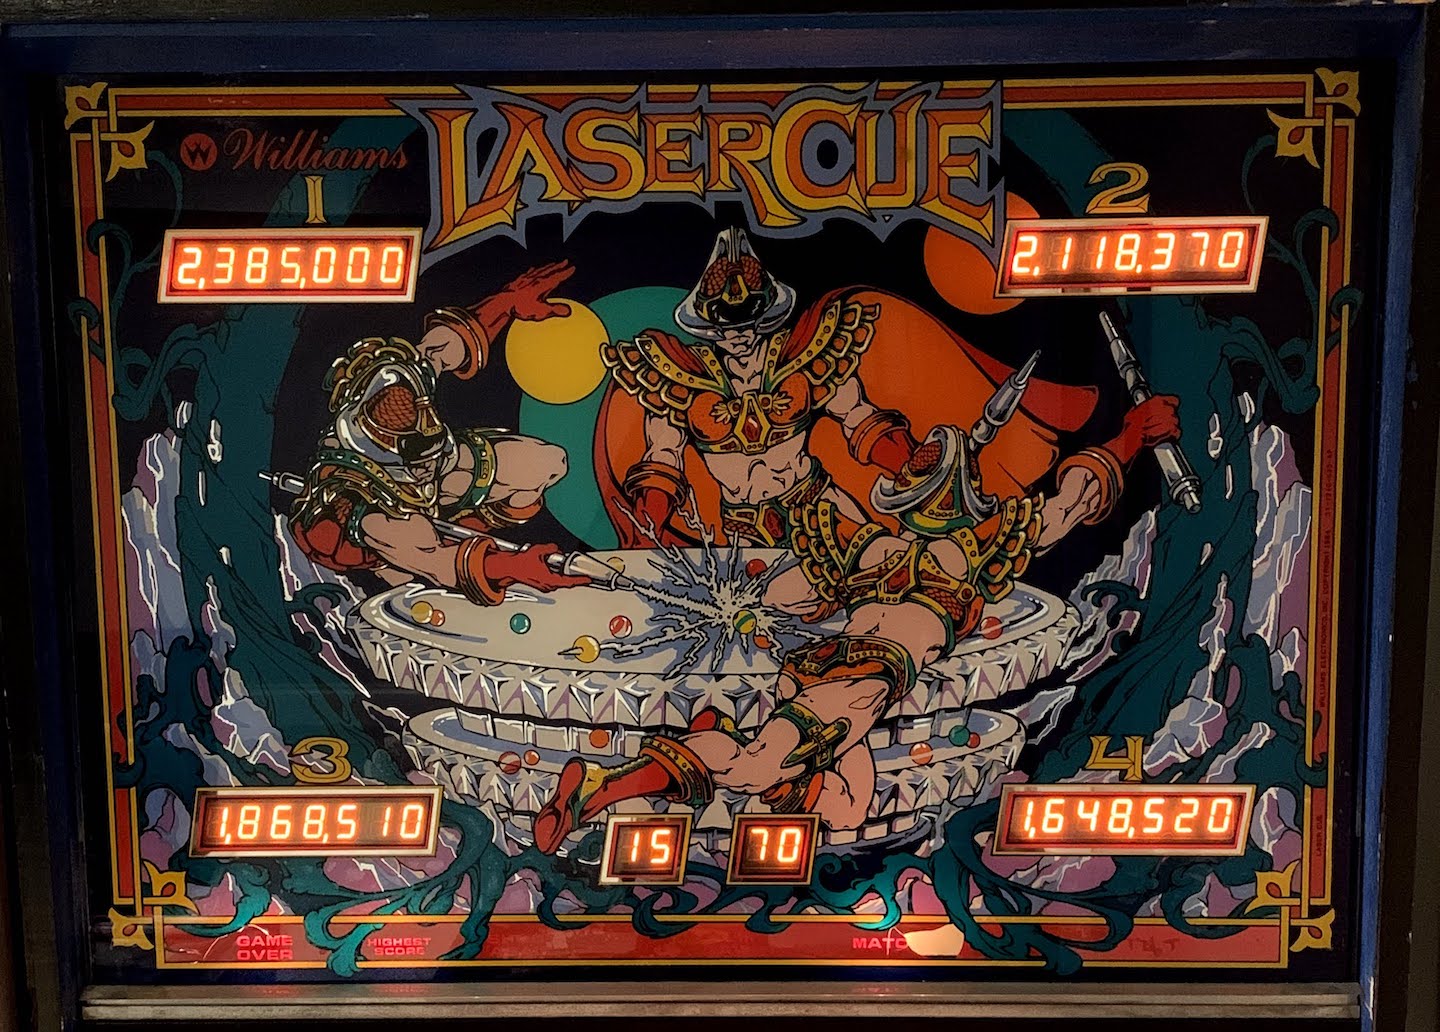 Laser Cue high score display